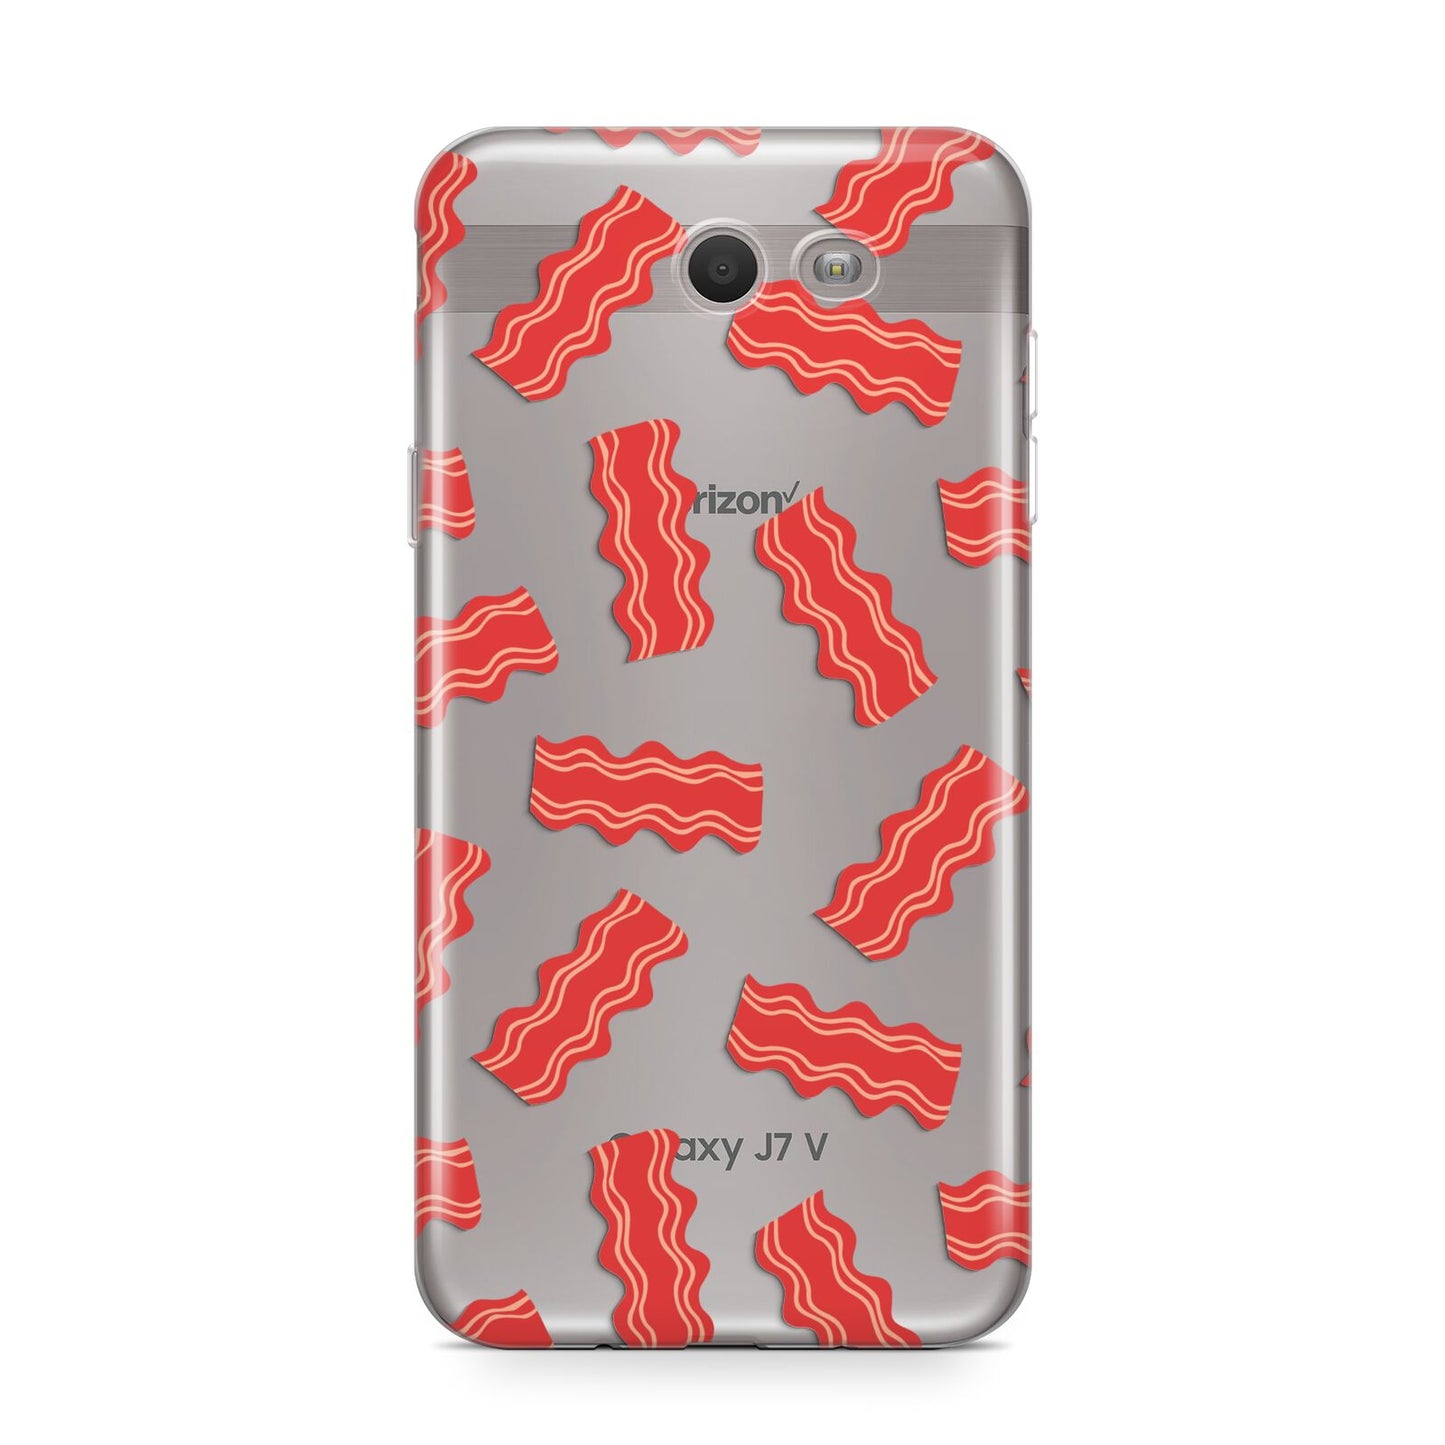 Bacon Samsung Galaxy J7 2017 Case